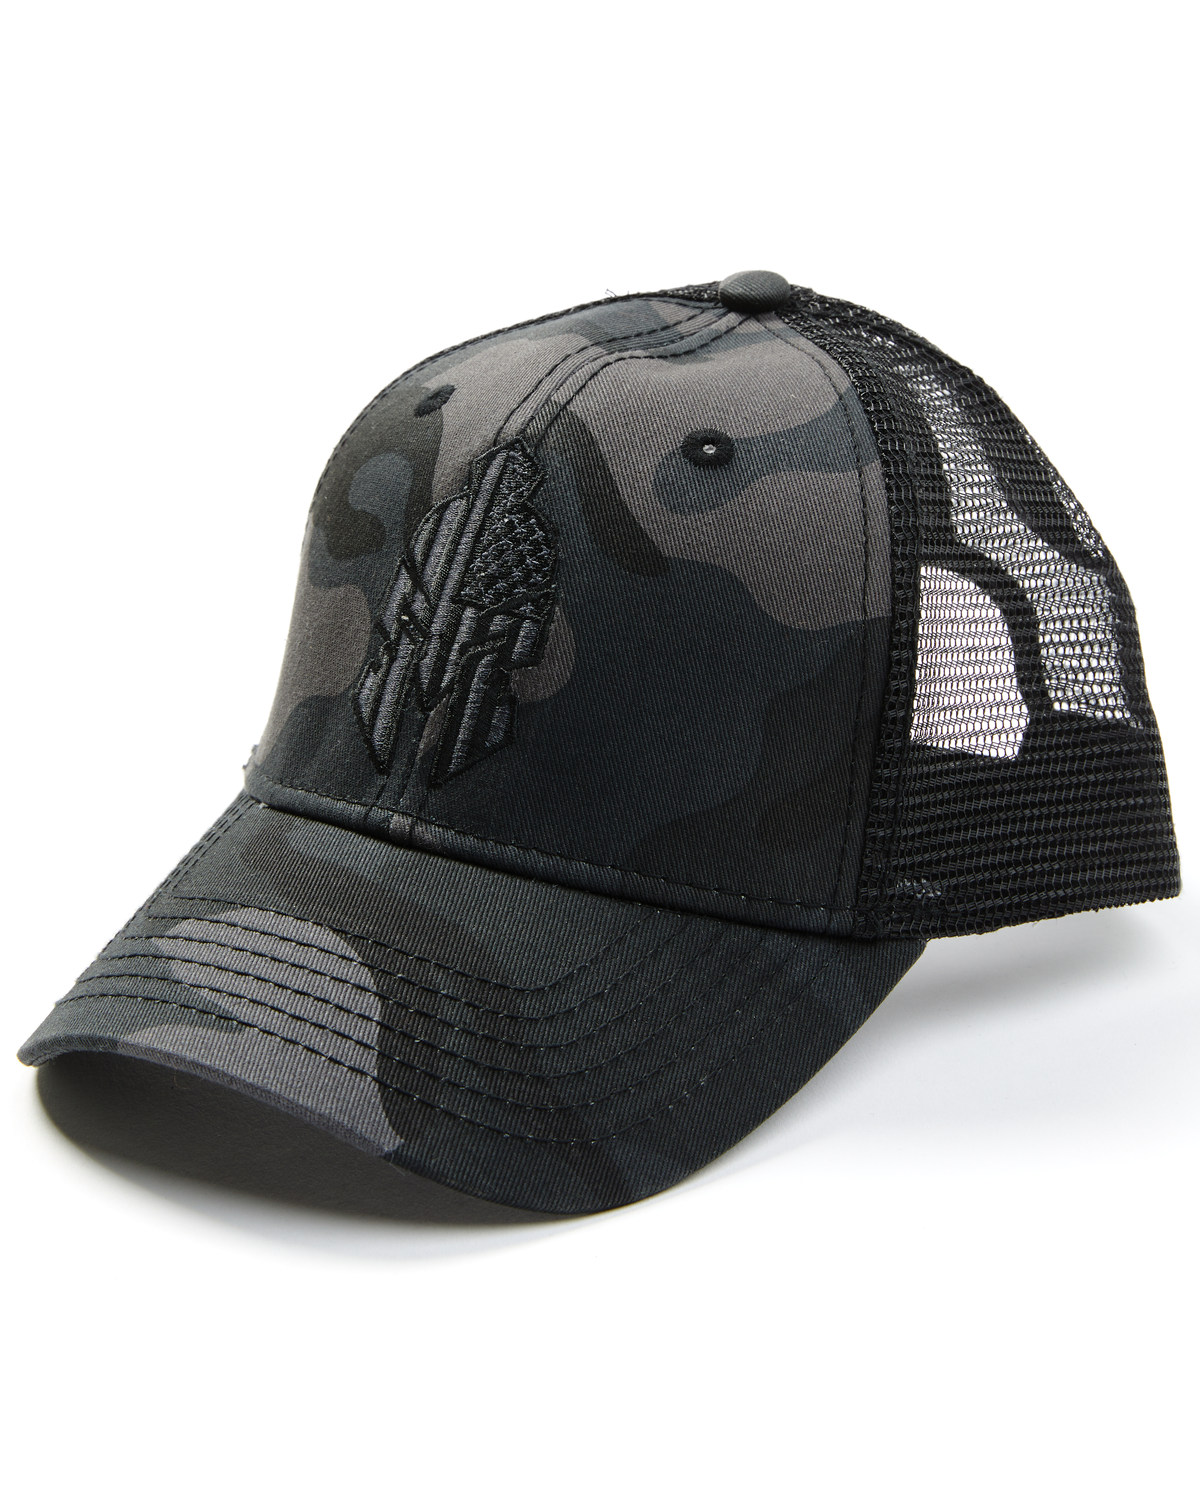 H3 Sportgear Men's Spartan Helmet Embroidered Camo Print Ball Cap